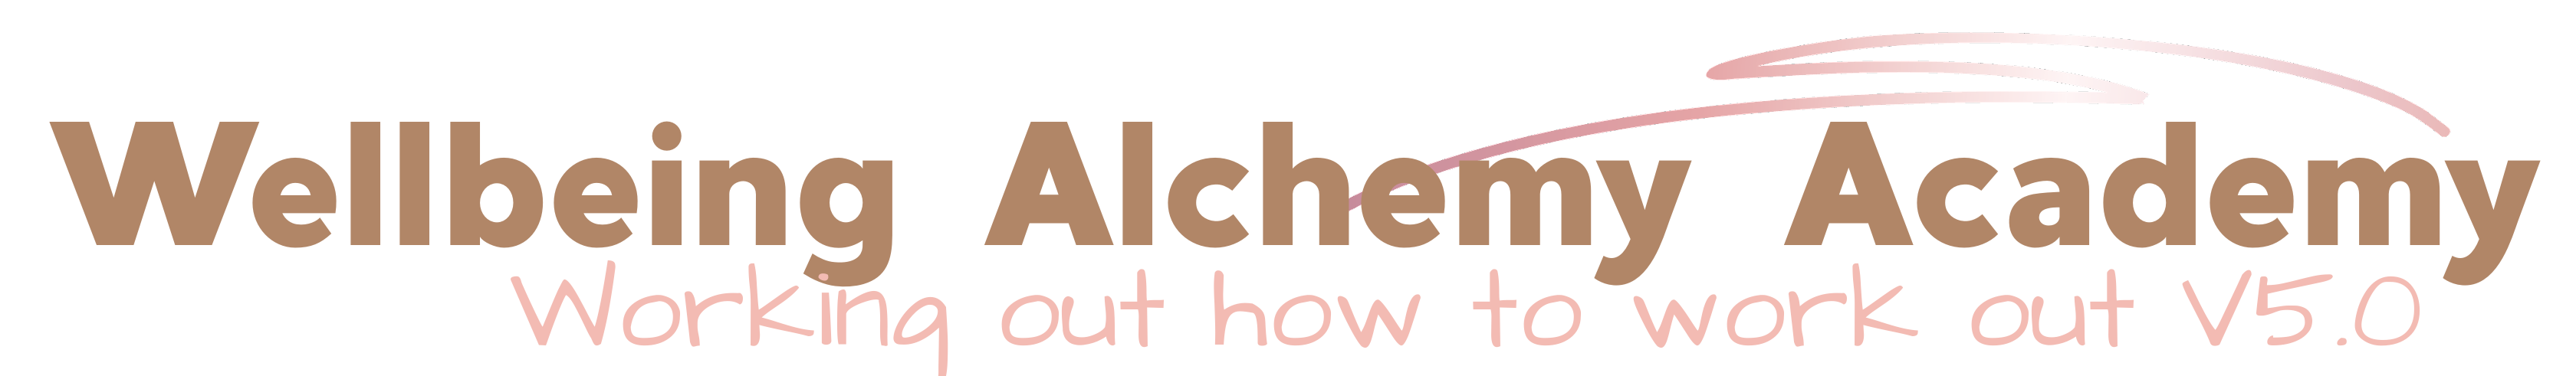 Wellbeing Alchemy Academy